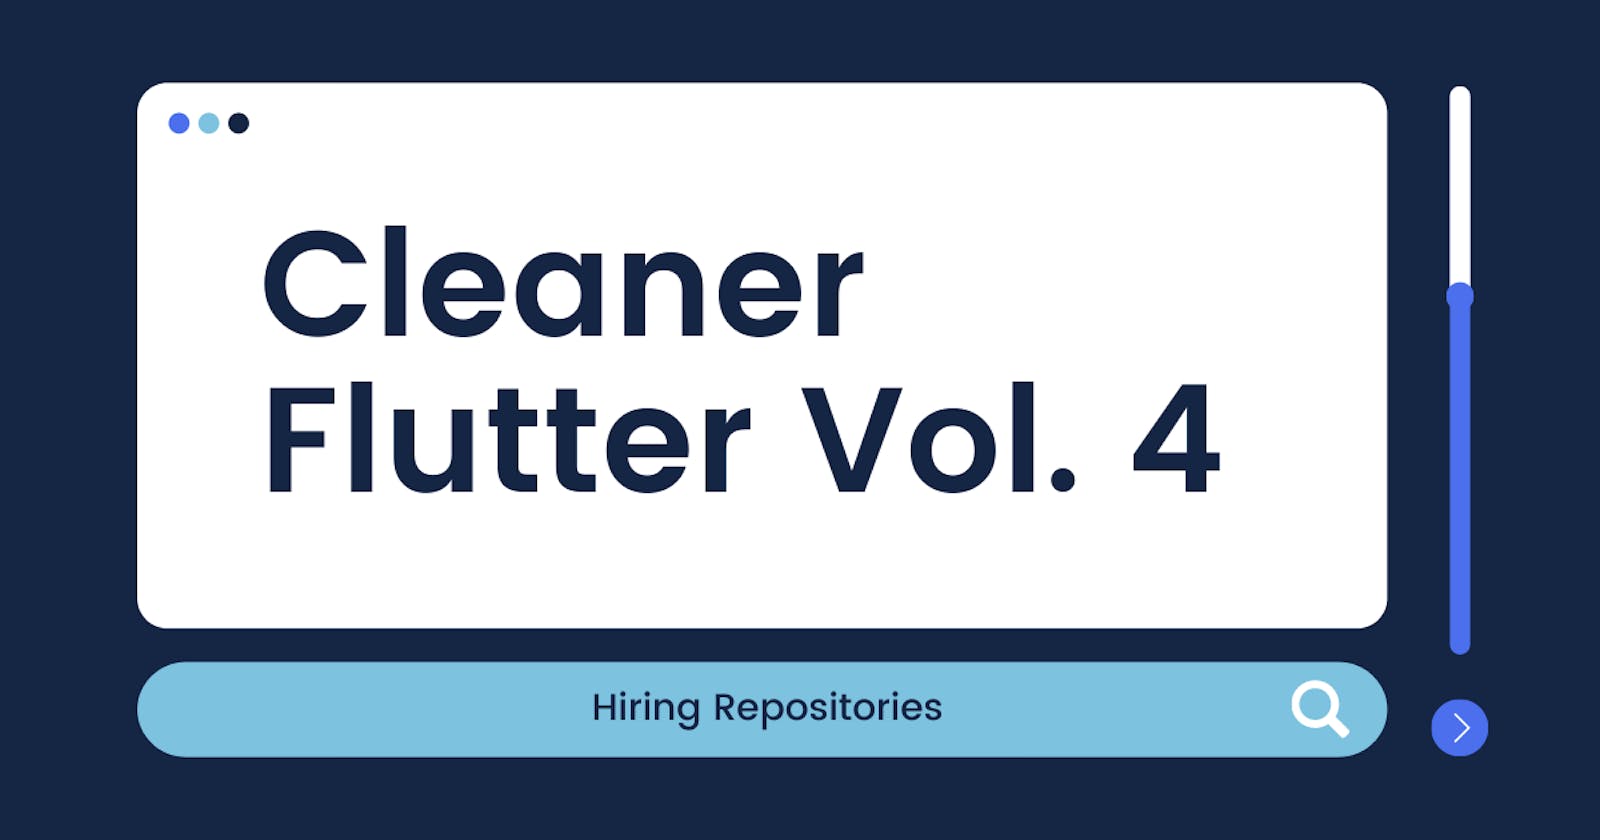 Cleaner Flutter Vol. 4: Hiring repositories